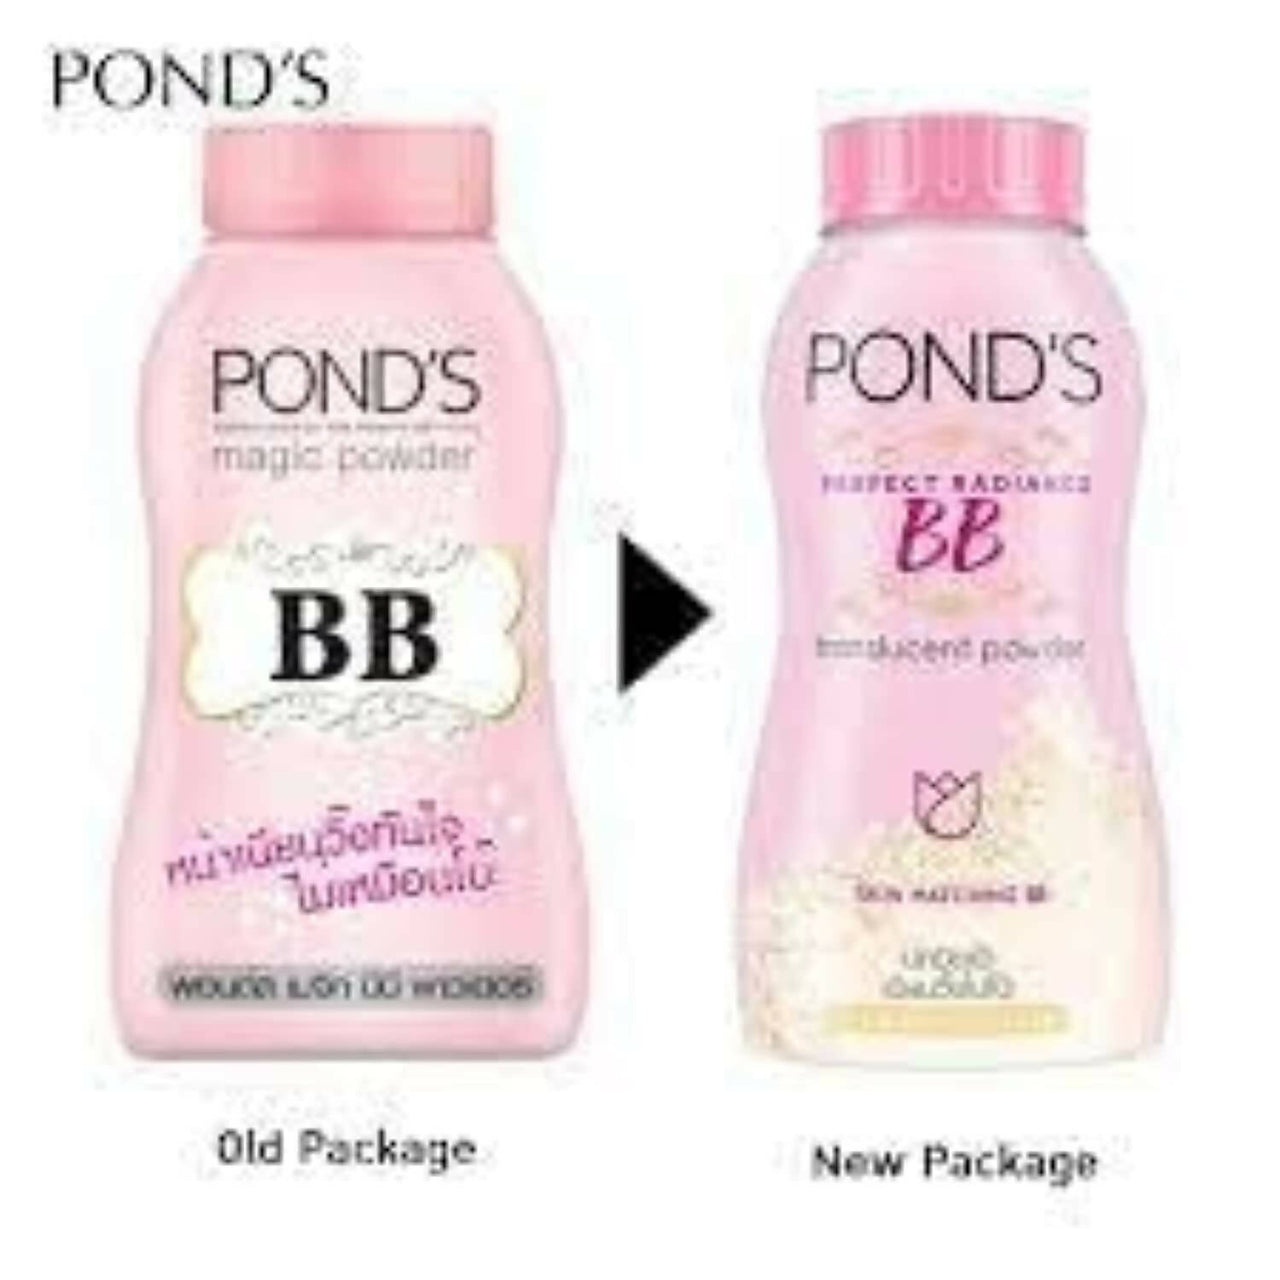 Ponds Perfect Radiance BB Translucent Powder - Distacart